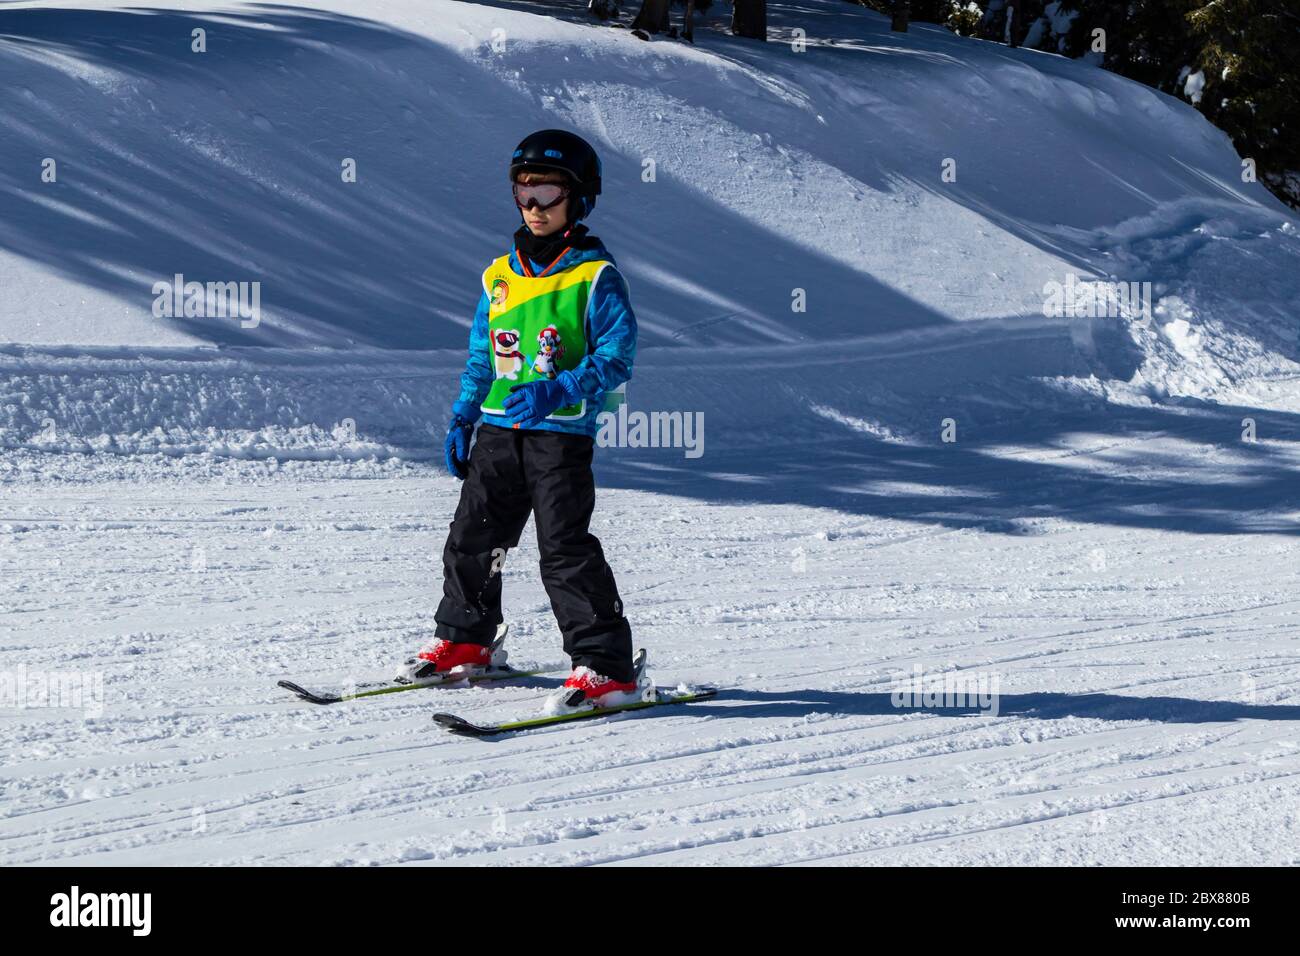 Sureanu Ski Resort, Romania - Child skiing in mountains. Ski race for young children. Winter sport for family. Kids ski lesson in alpin school Stock Photo